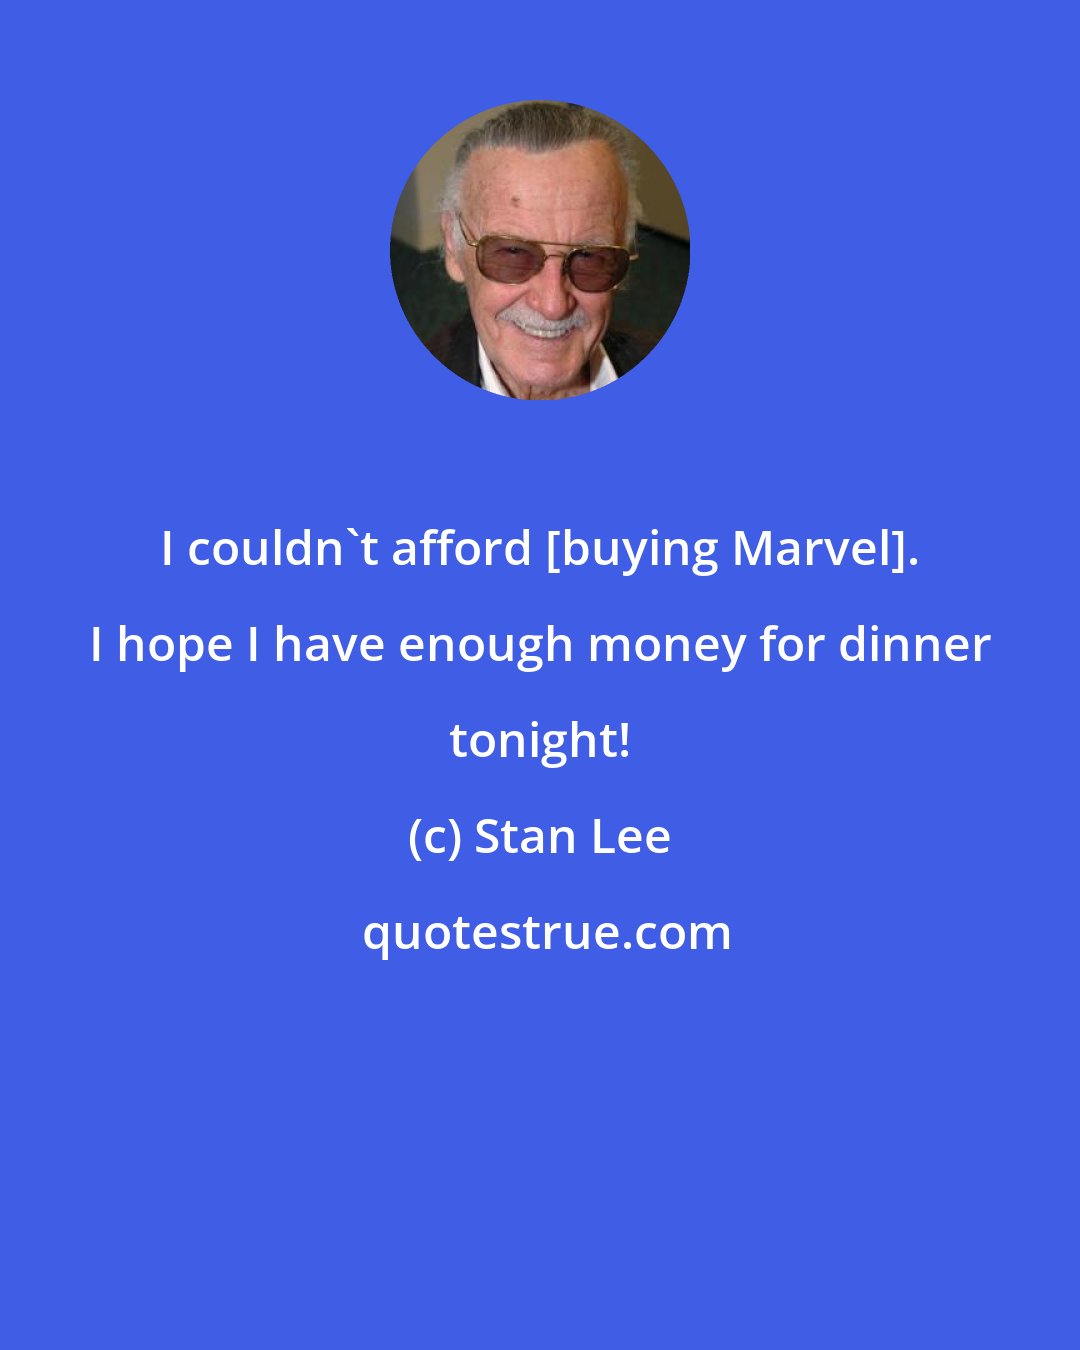 Stan Lee: I couldn't afford [buying Marvel]. I hope I have enough money for dinner tonight!